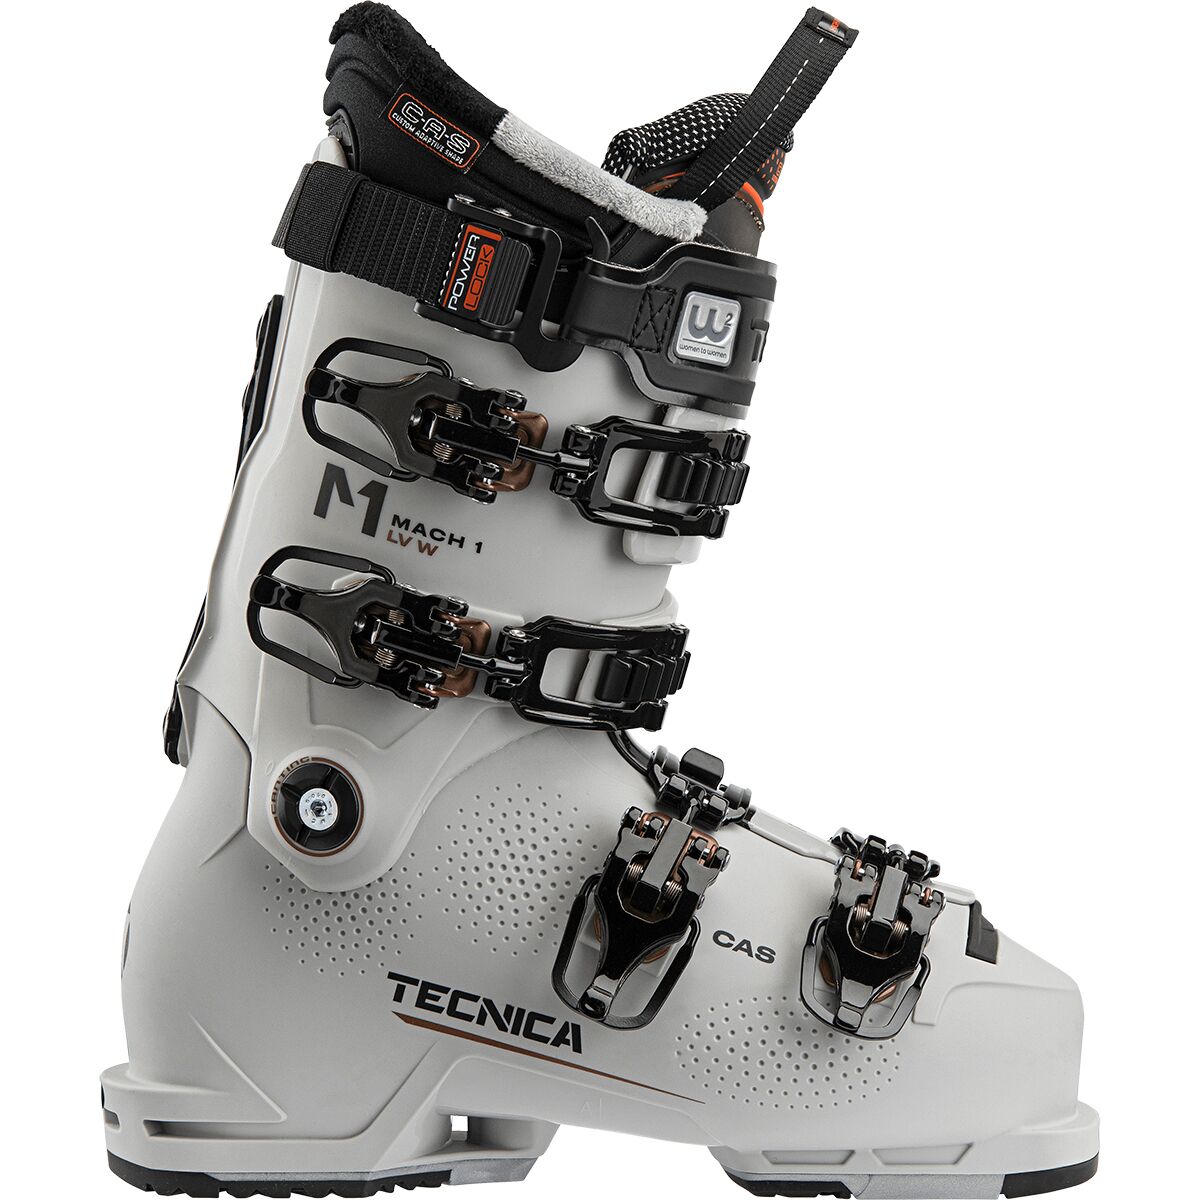 Tecnica Mach1 LV Pro Ski Boot - Women's